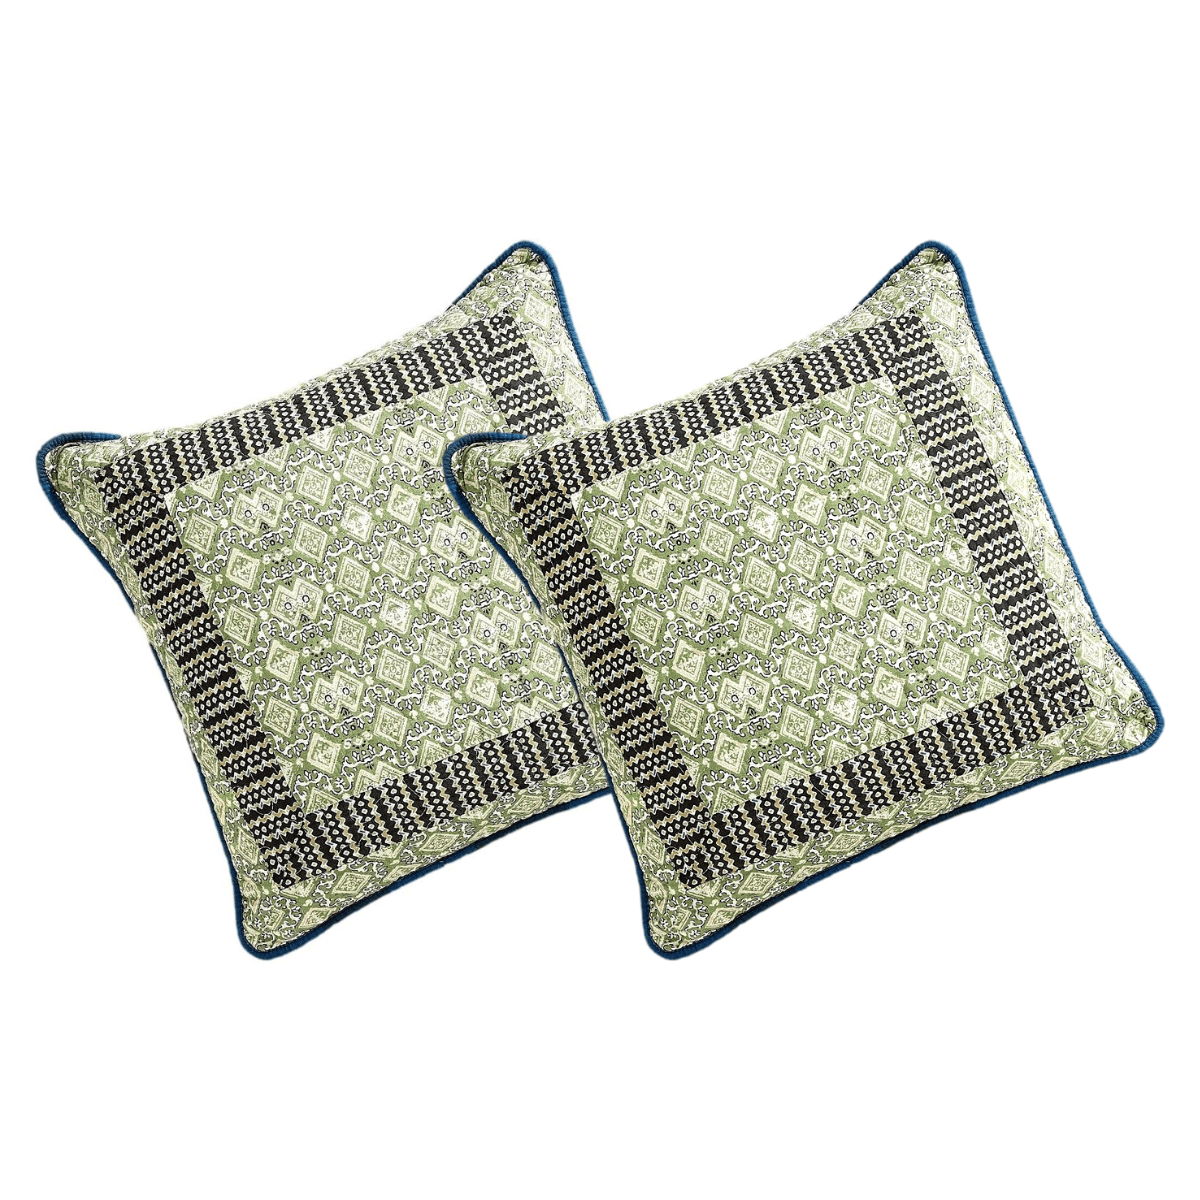 Tache Cotton Patchwork Teal Blue Green Paisley Bohemian Ocean Cushion Cover 2-Pieces (JHW-888) - Tache Home Fashion